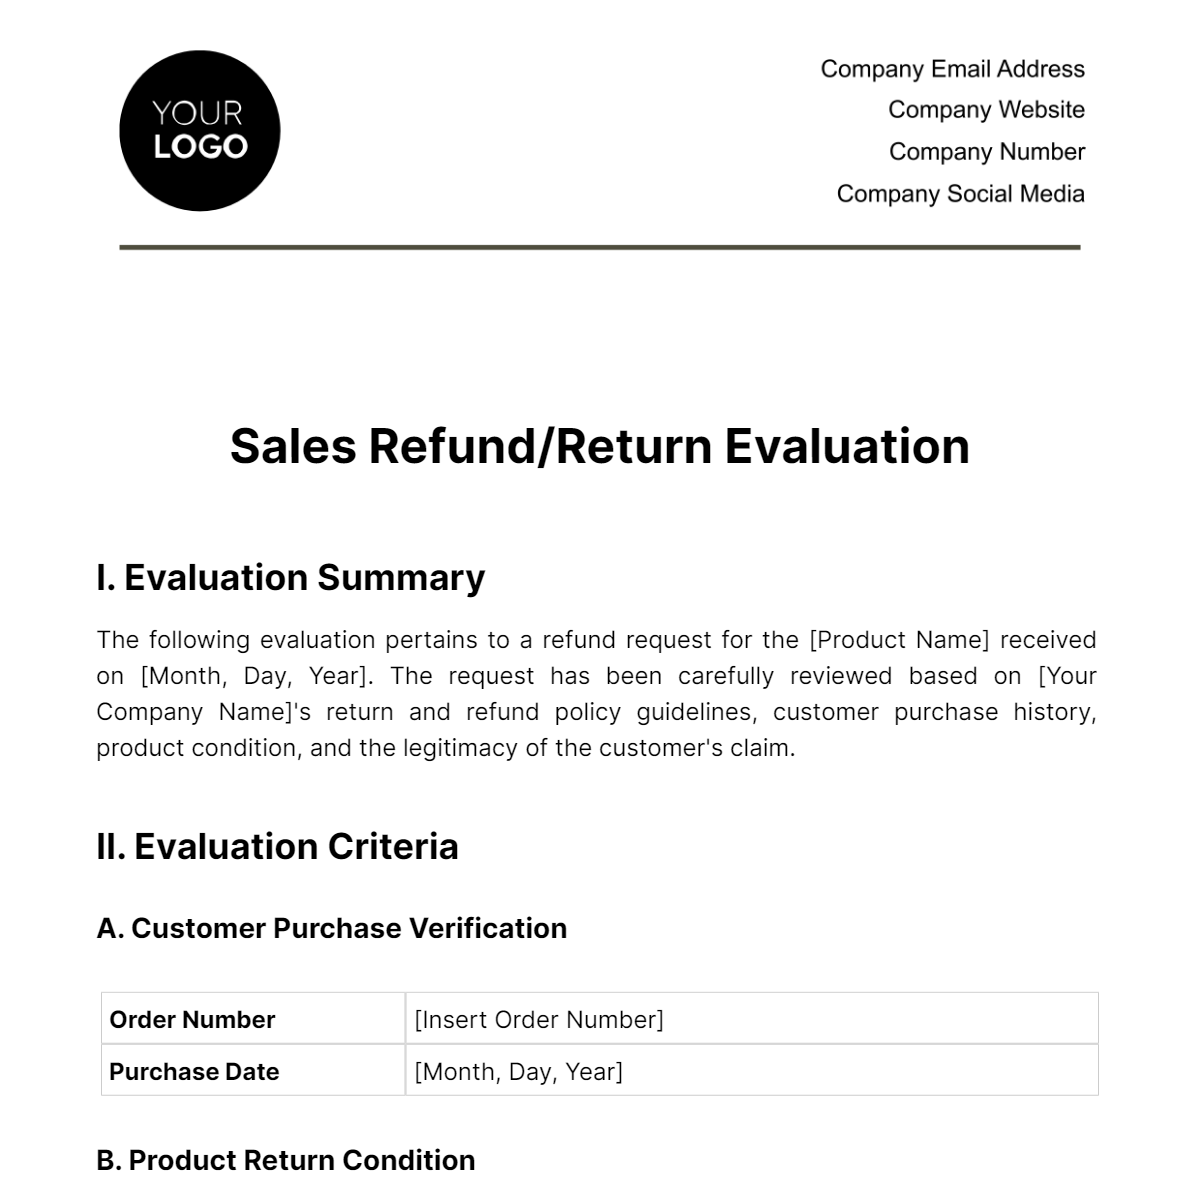 Sales Refund/Return Evaluation Template